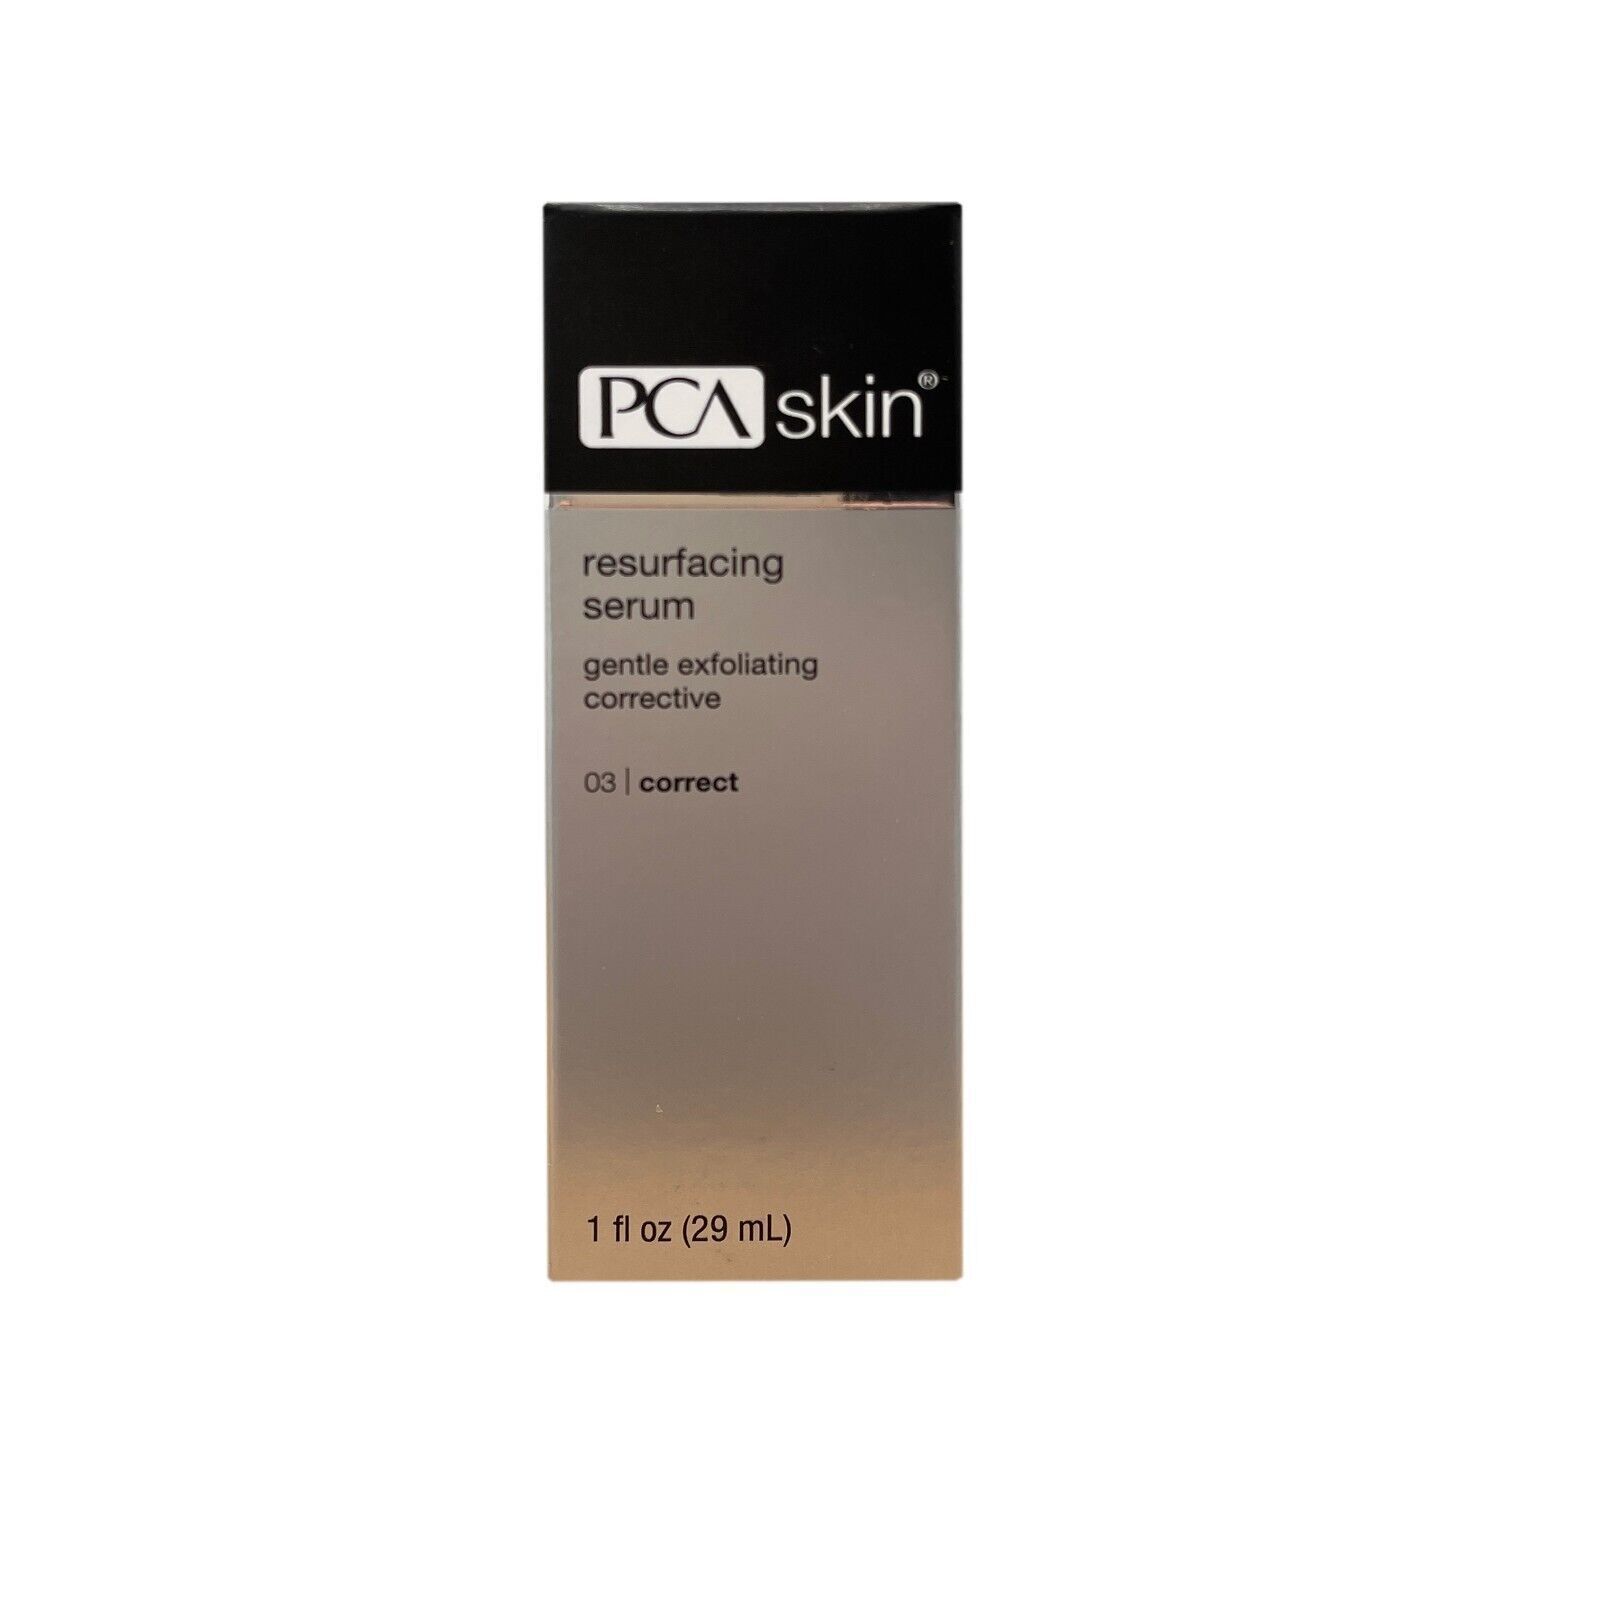 PCA Skin Resurfacing Serum - 1 fl oz (29 ml)